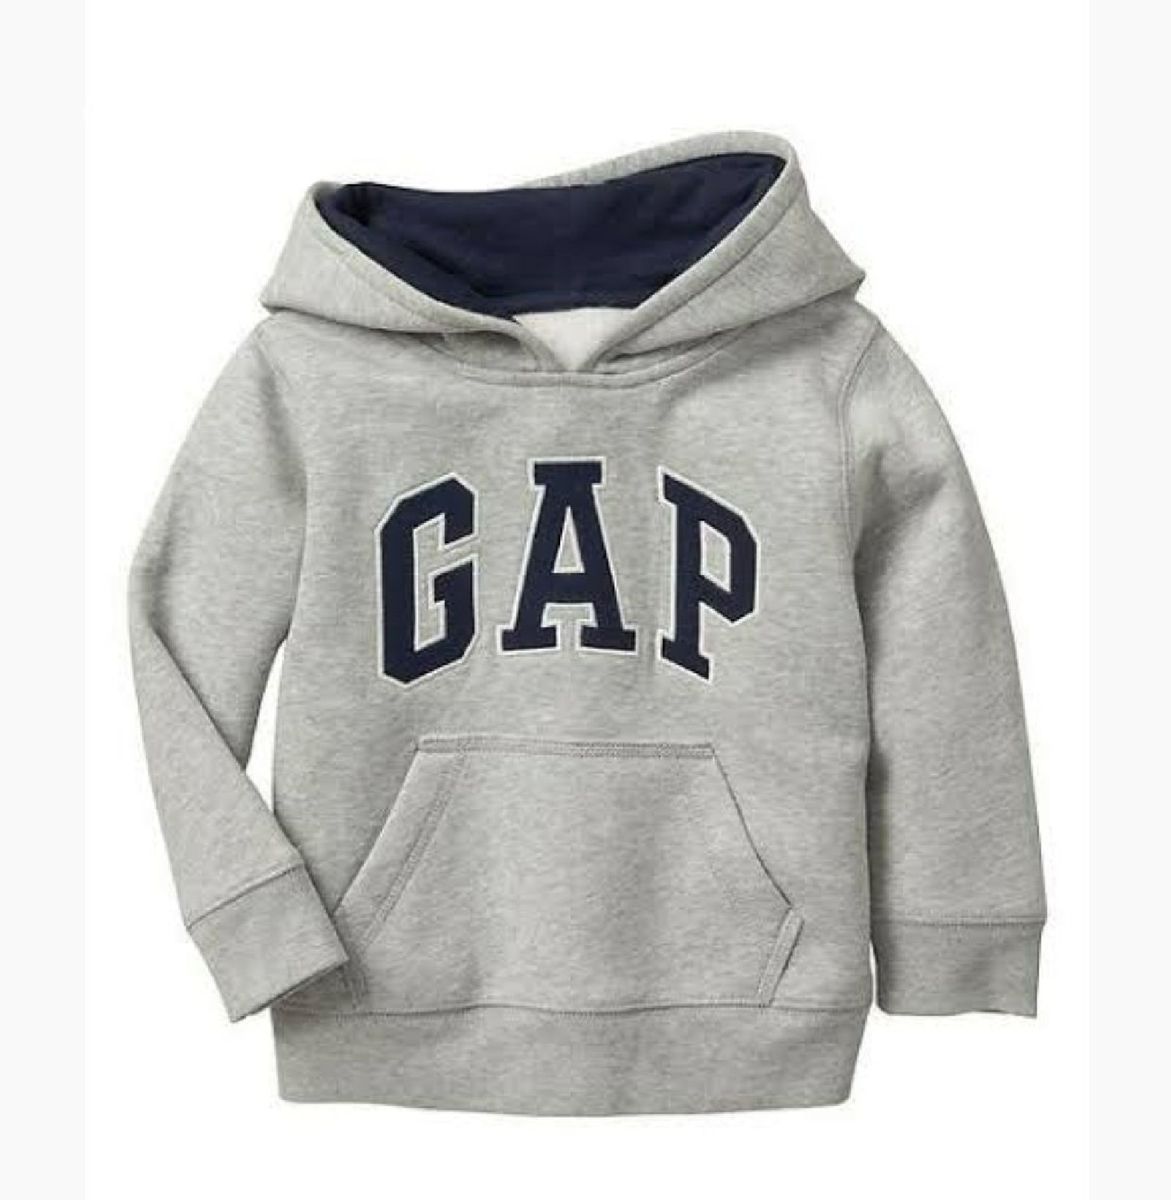 roupa infantil gap online